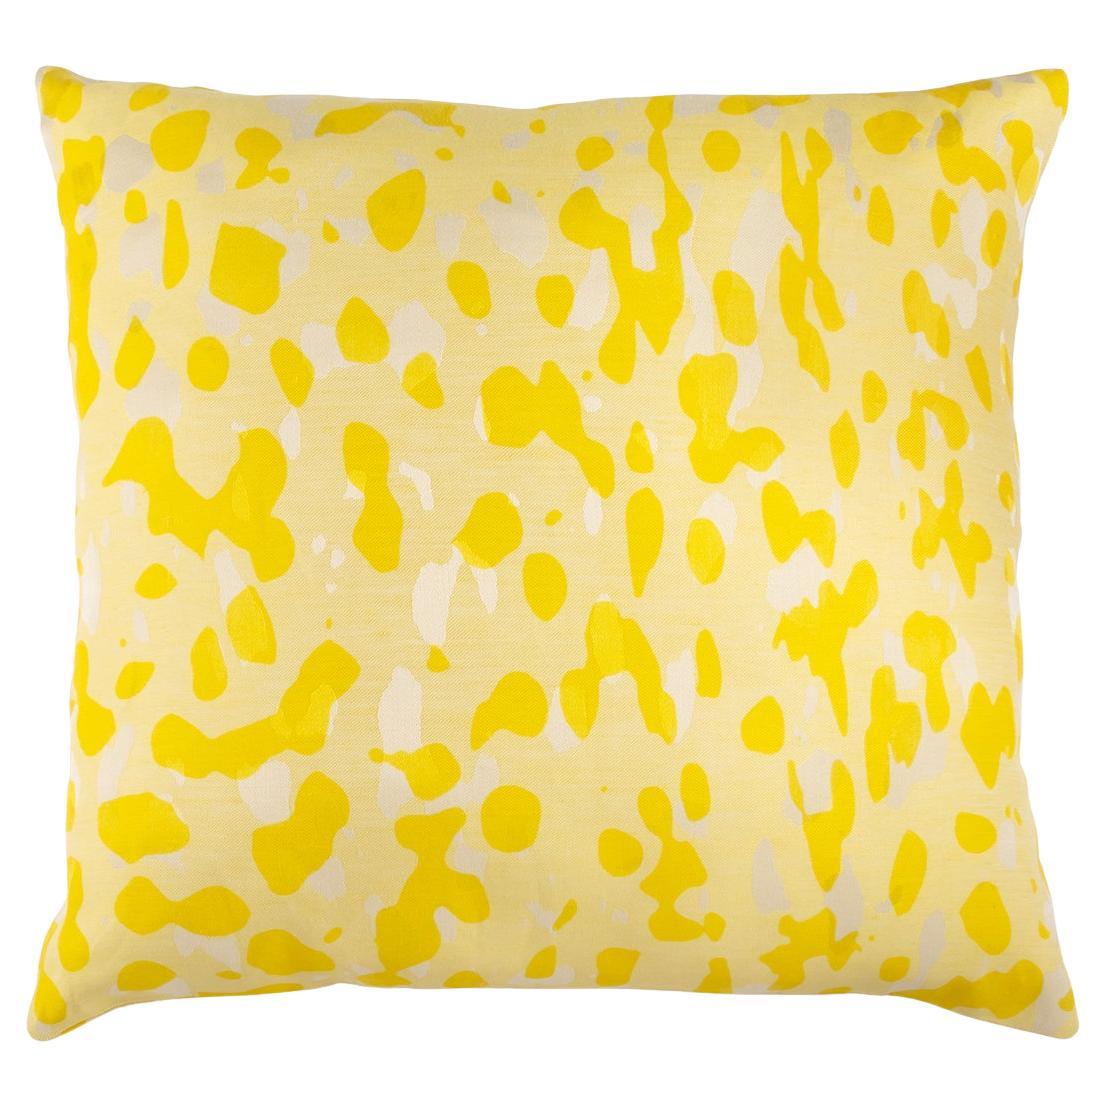 Macchia su Macchia Pineapple Jacquard Cushion 50x50cm by Stories of Italy